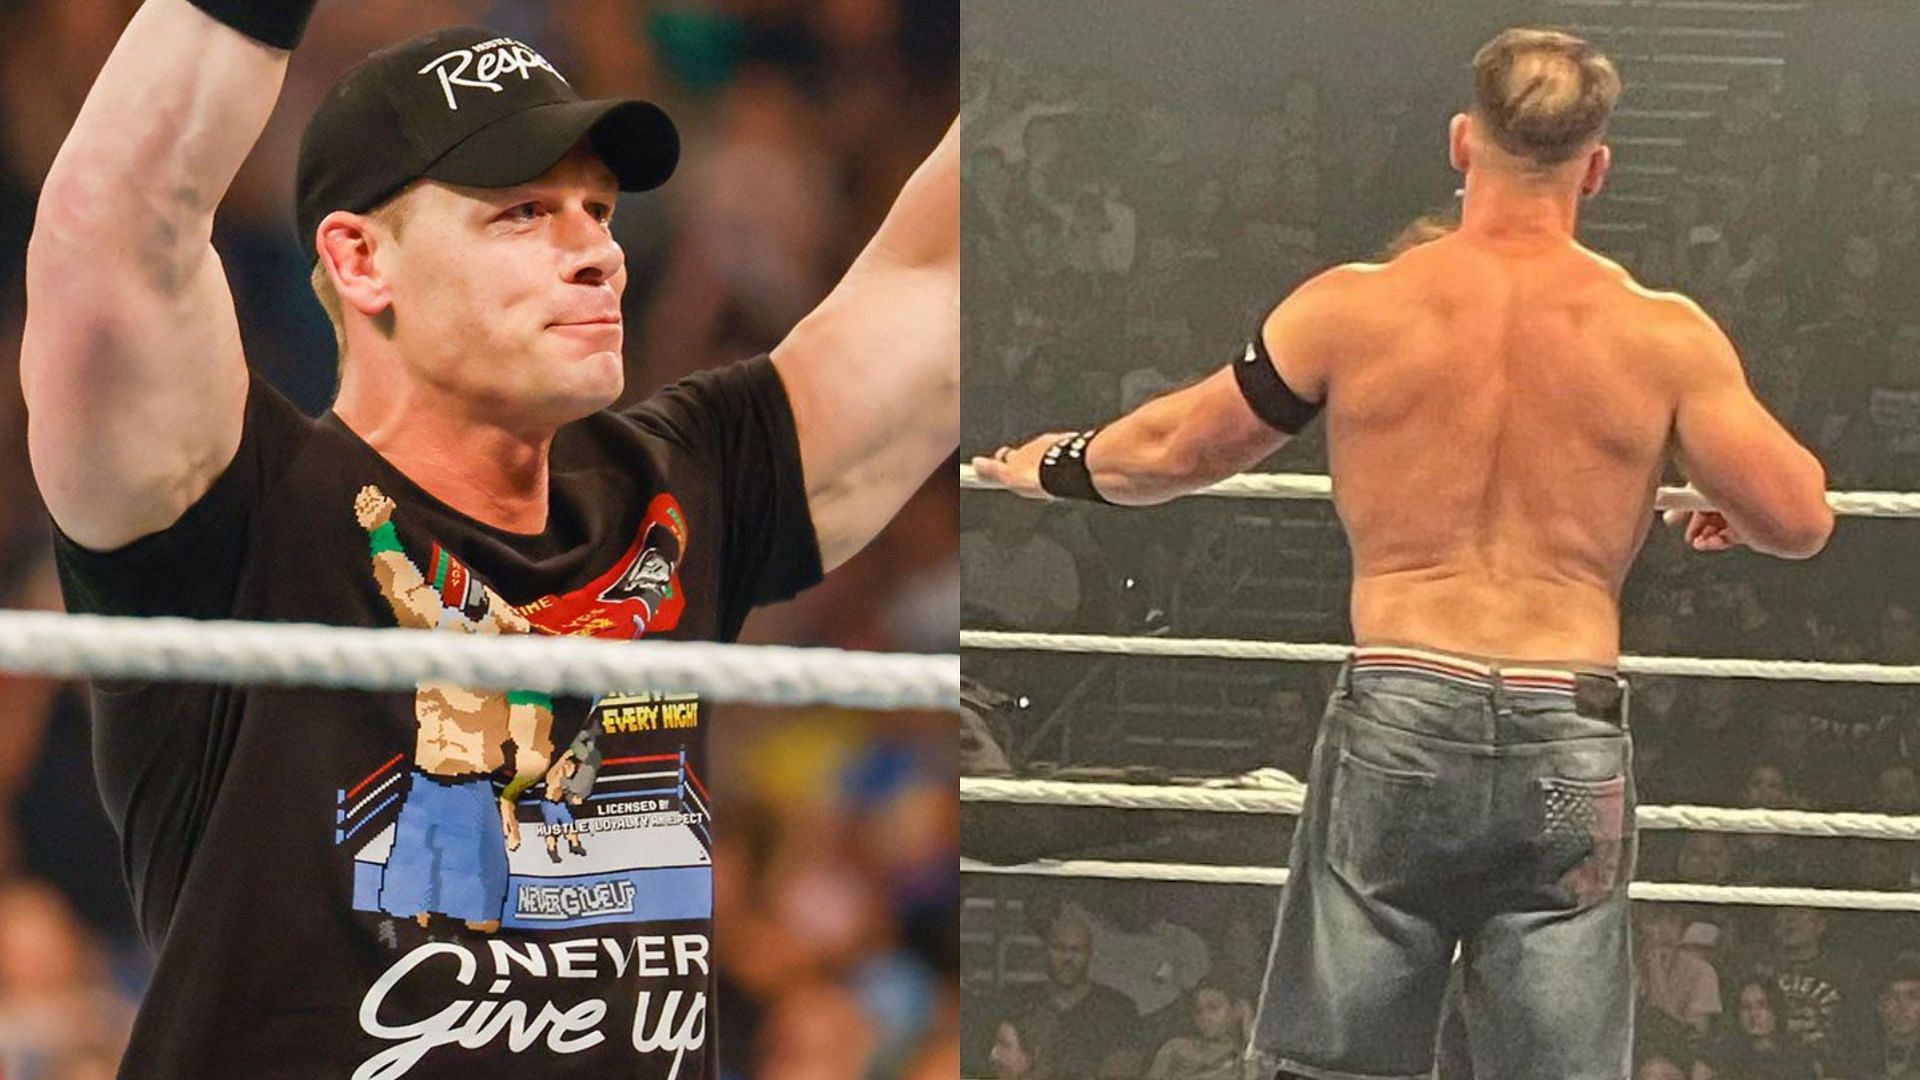 John Cena returned to in-ring action on the December 30, 2022, episode of WWE SmackDown